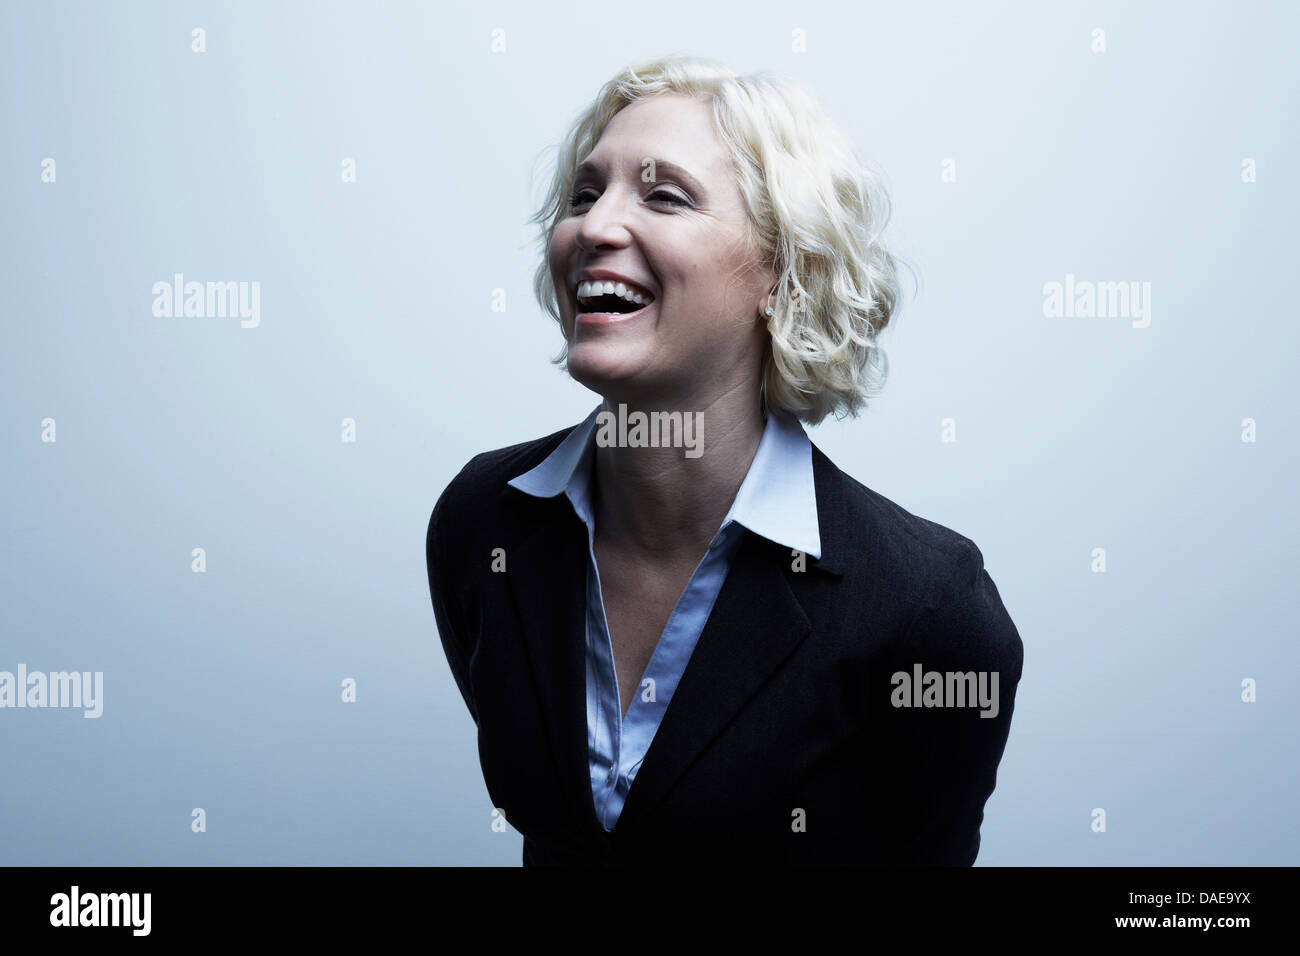 Studio portrait of businesswoman laughing Stock Photo